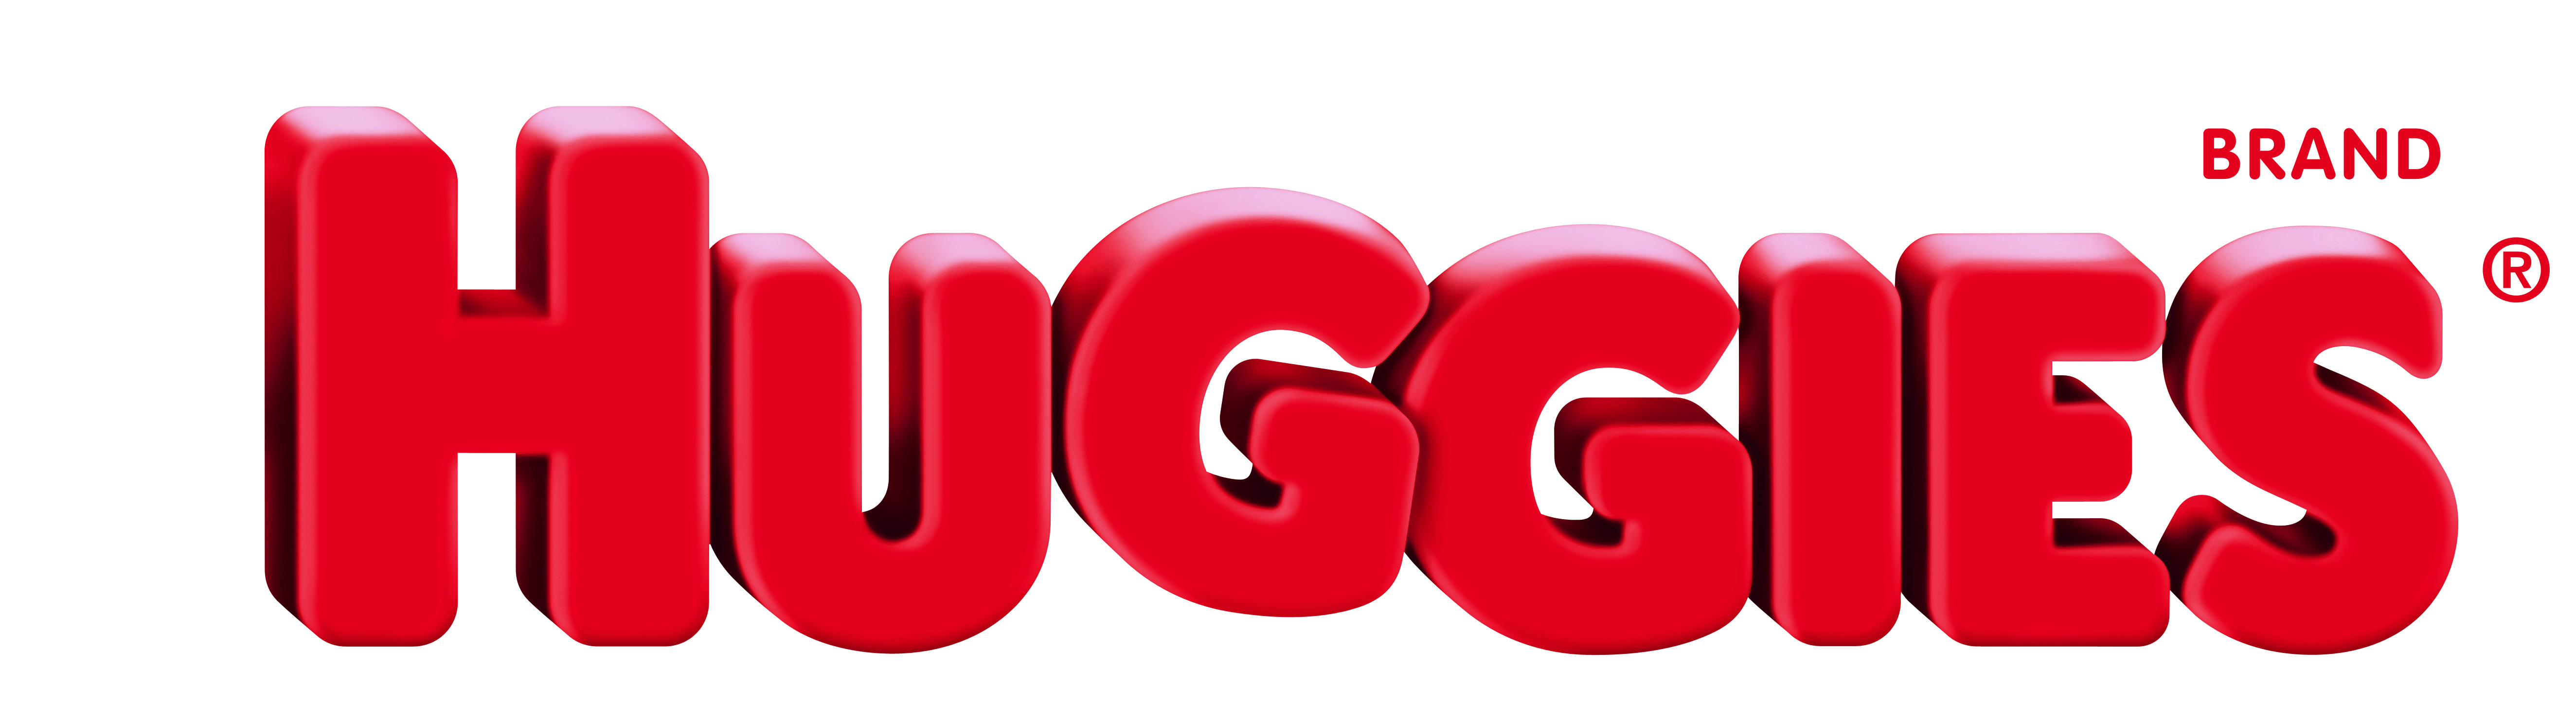 Huggies Logo - Huggies Brand Red Logo